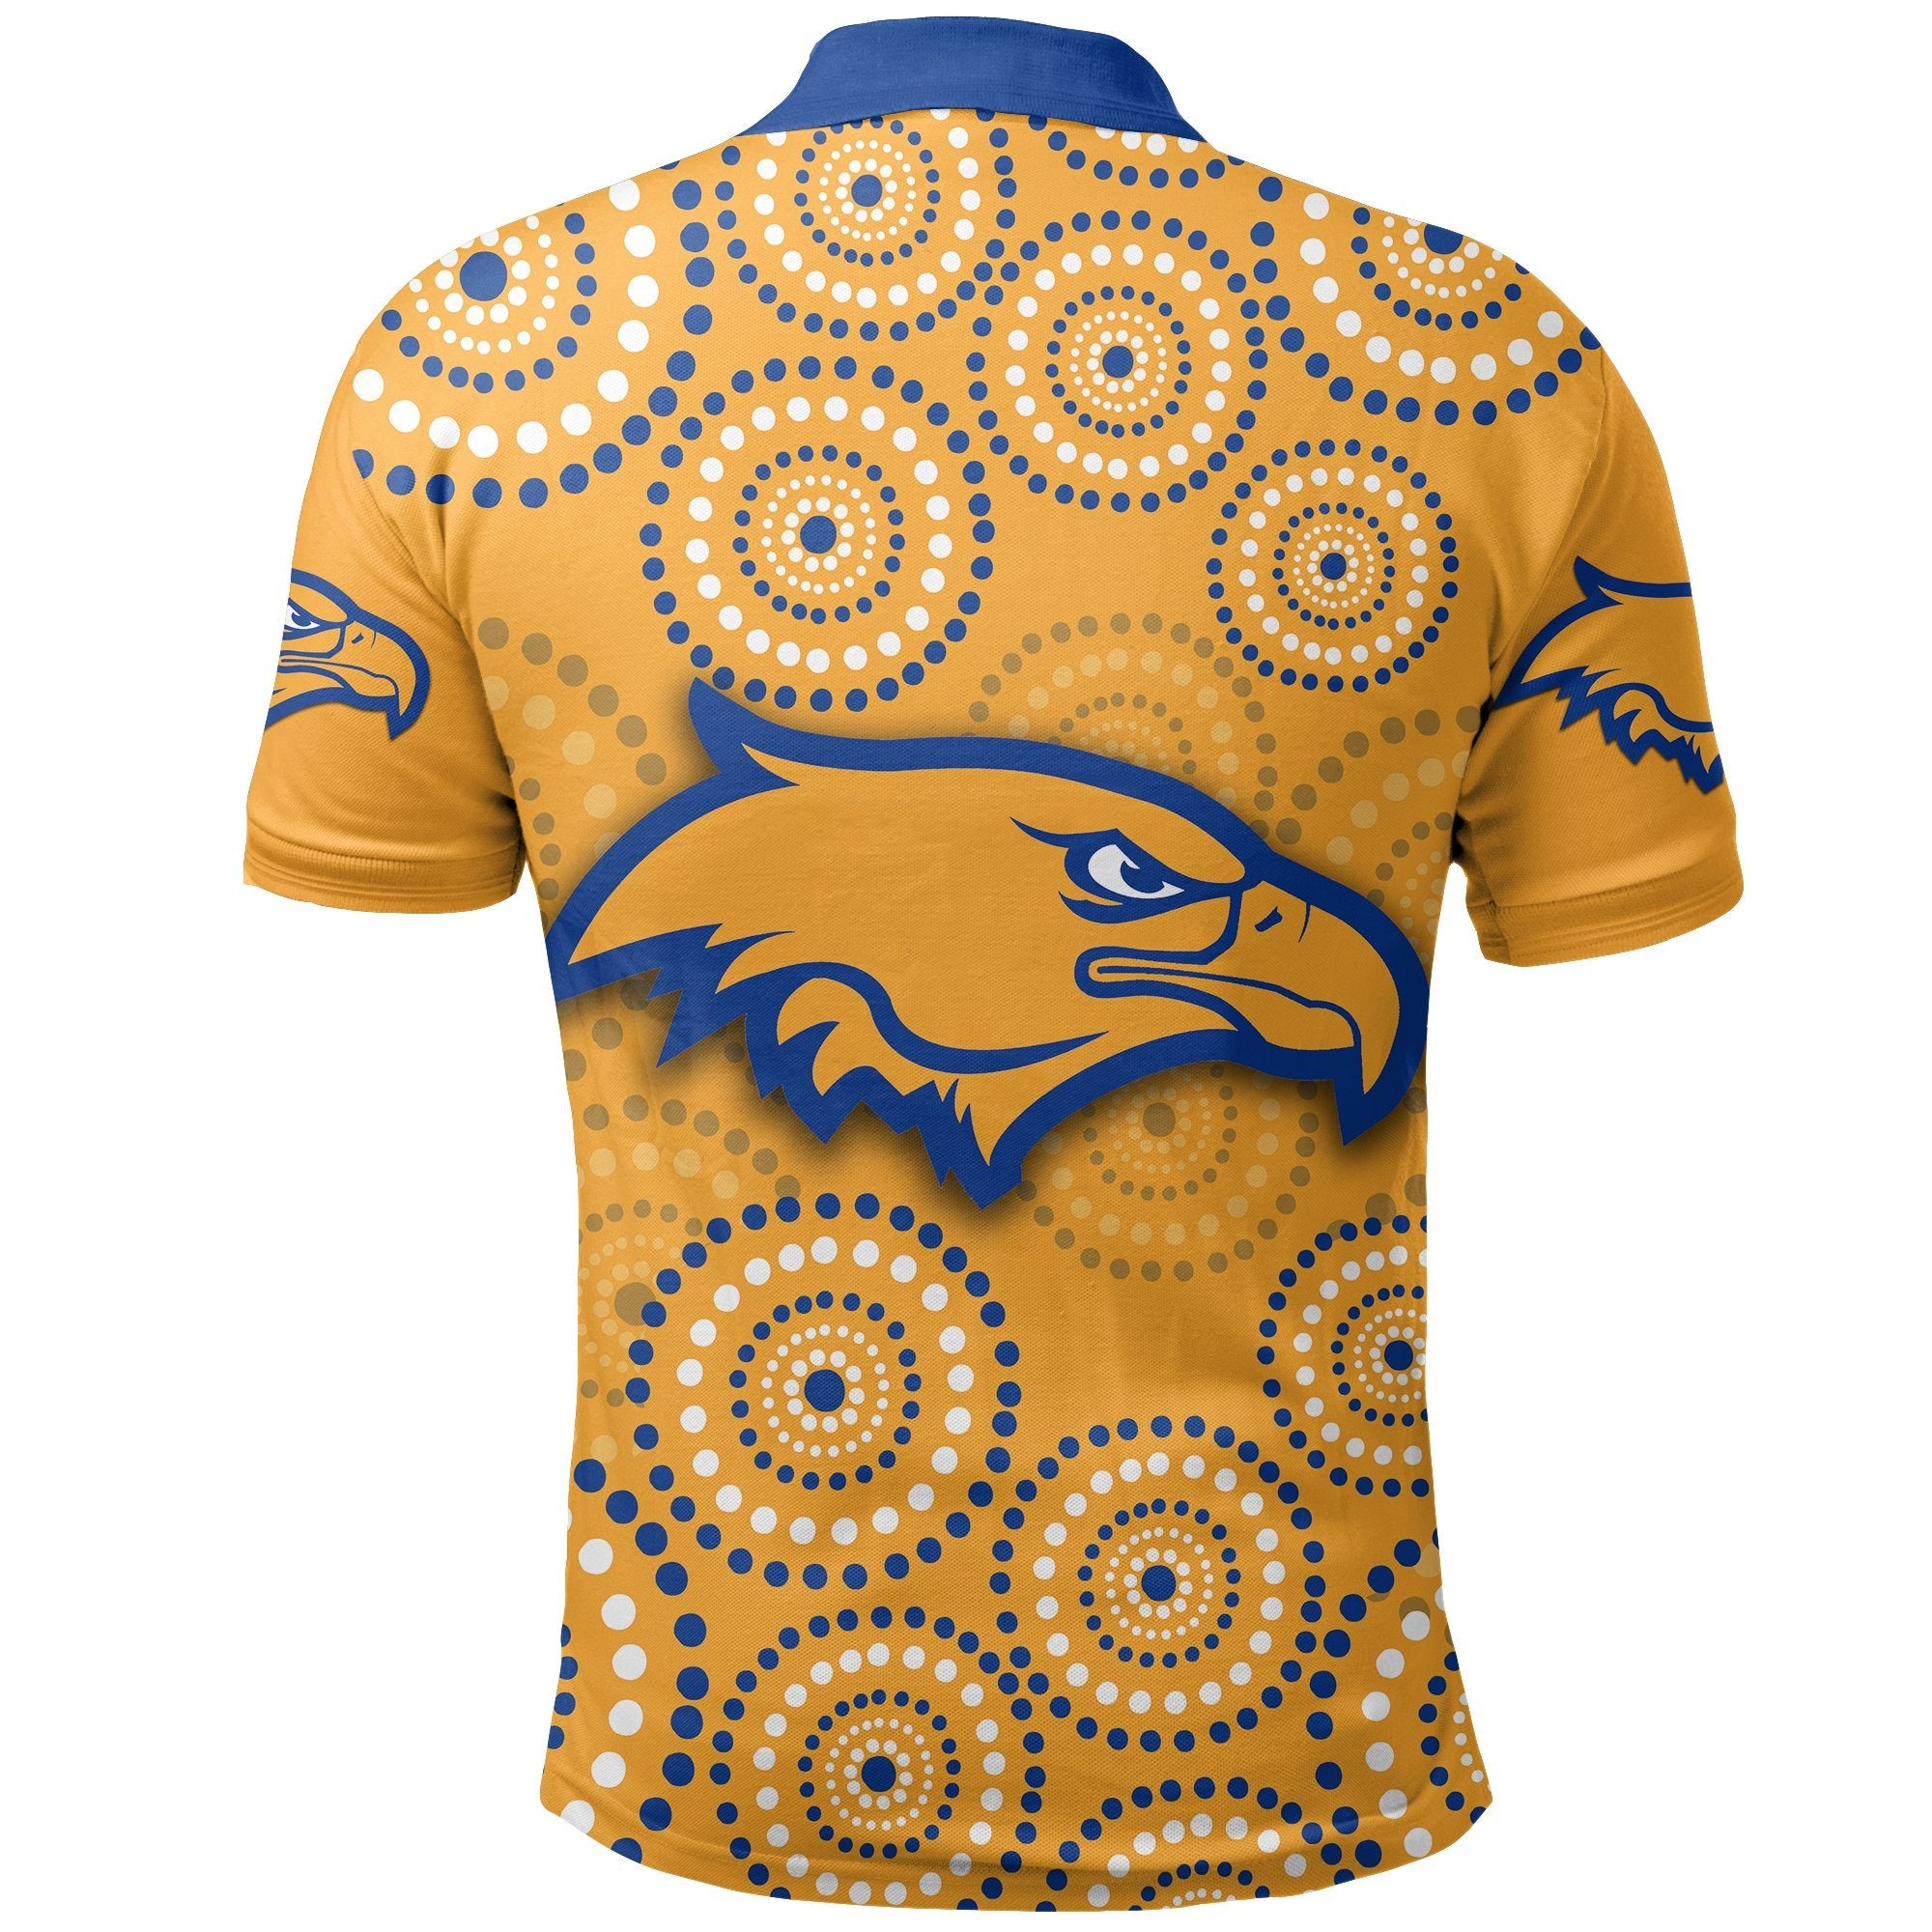 west-coast-eagles-polo-shirt-special-aboriginal-style